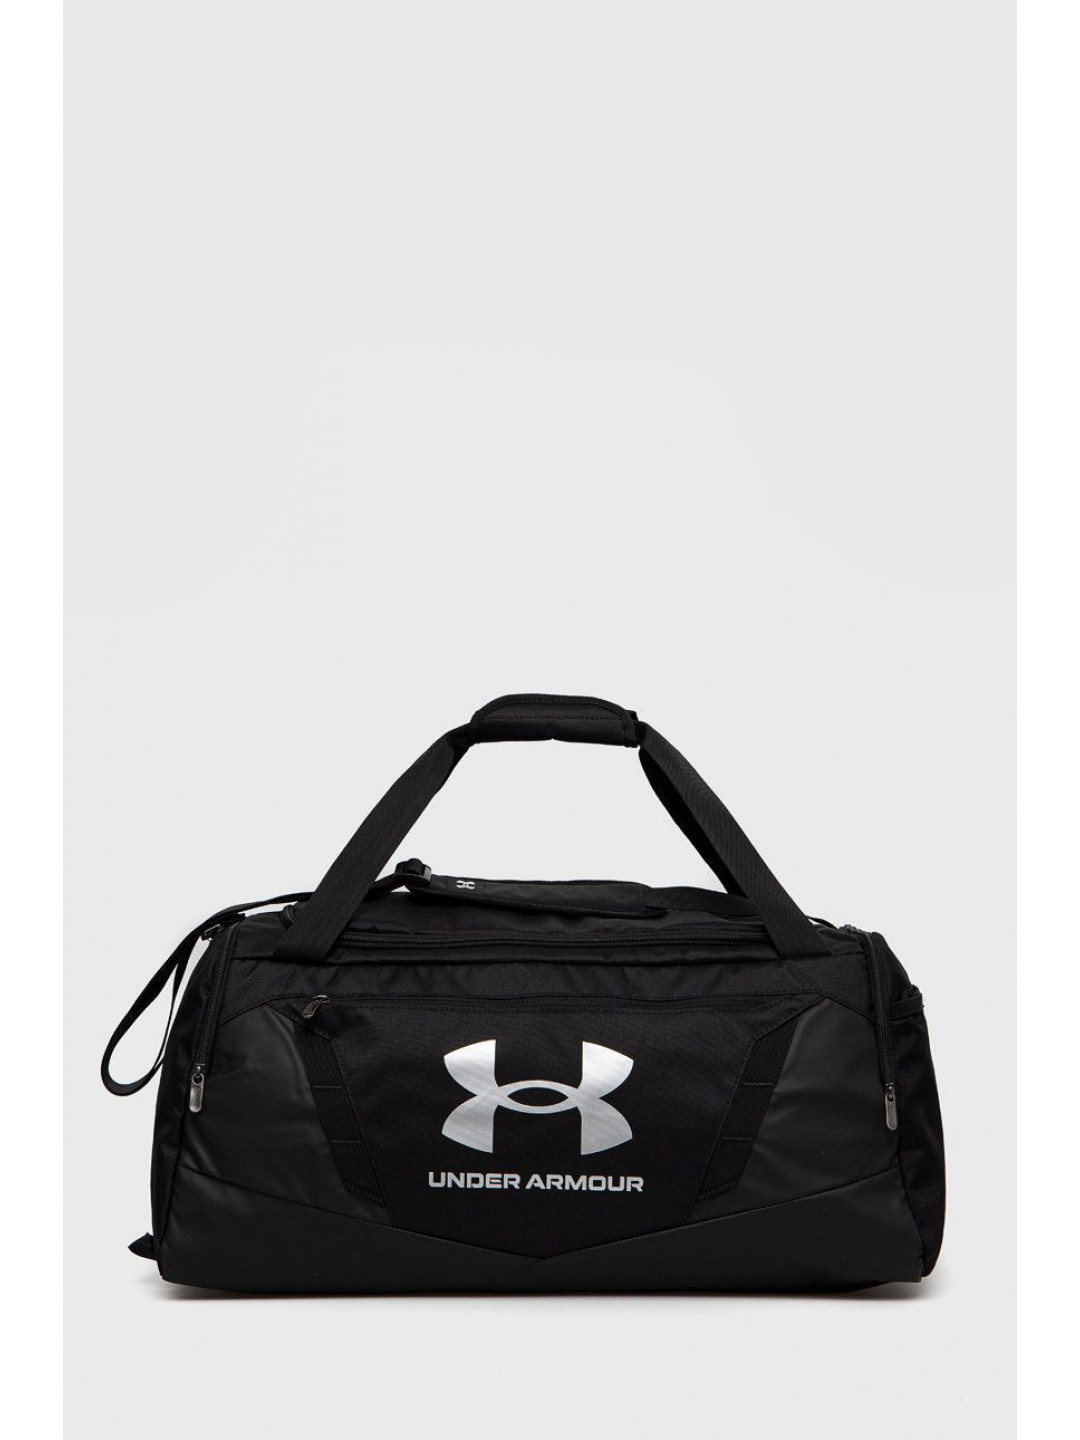 Sportovní taška Under Armour Undeniable 5 0 Medium černá barva 1369223